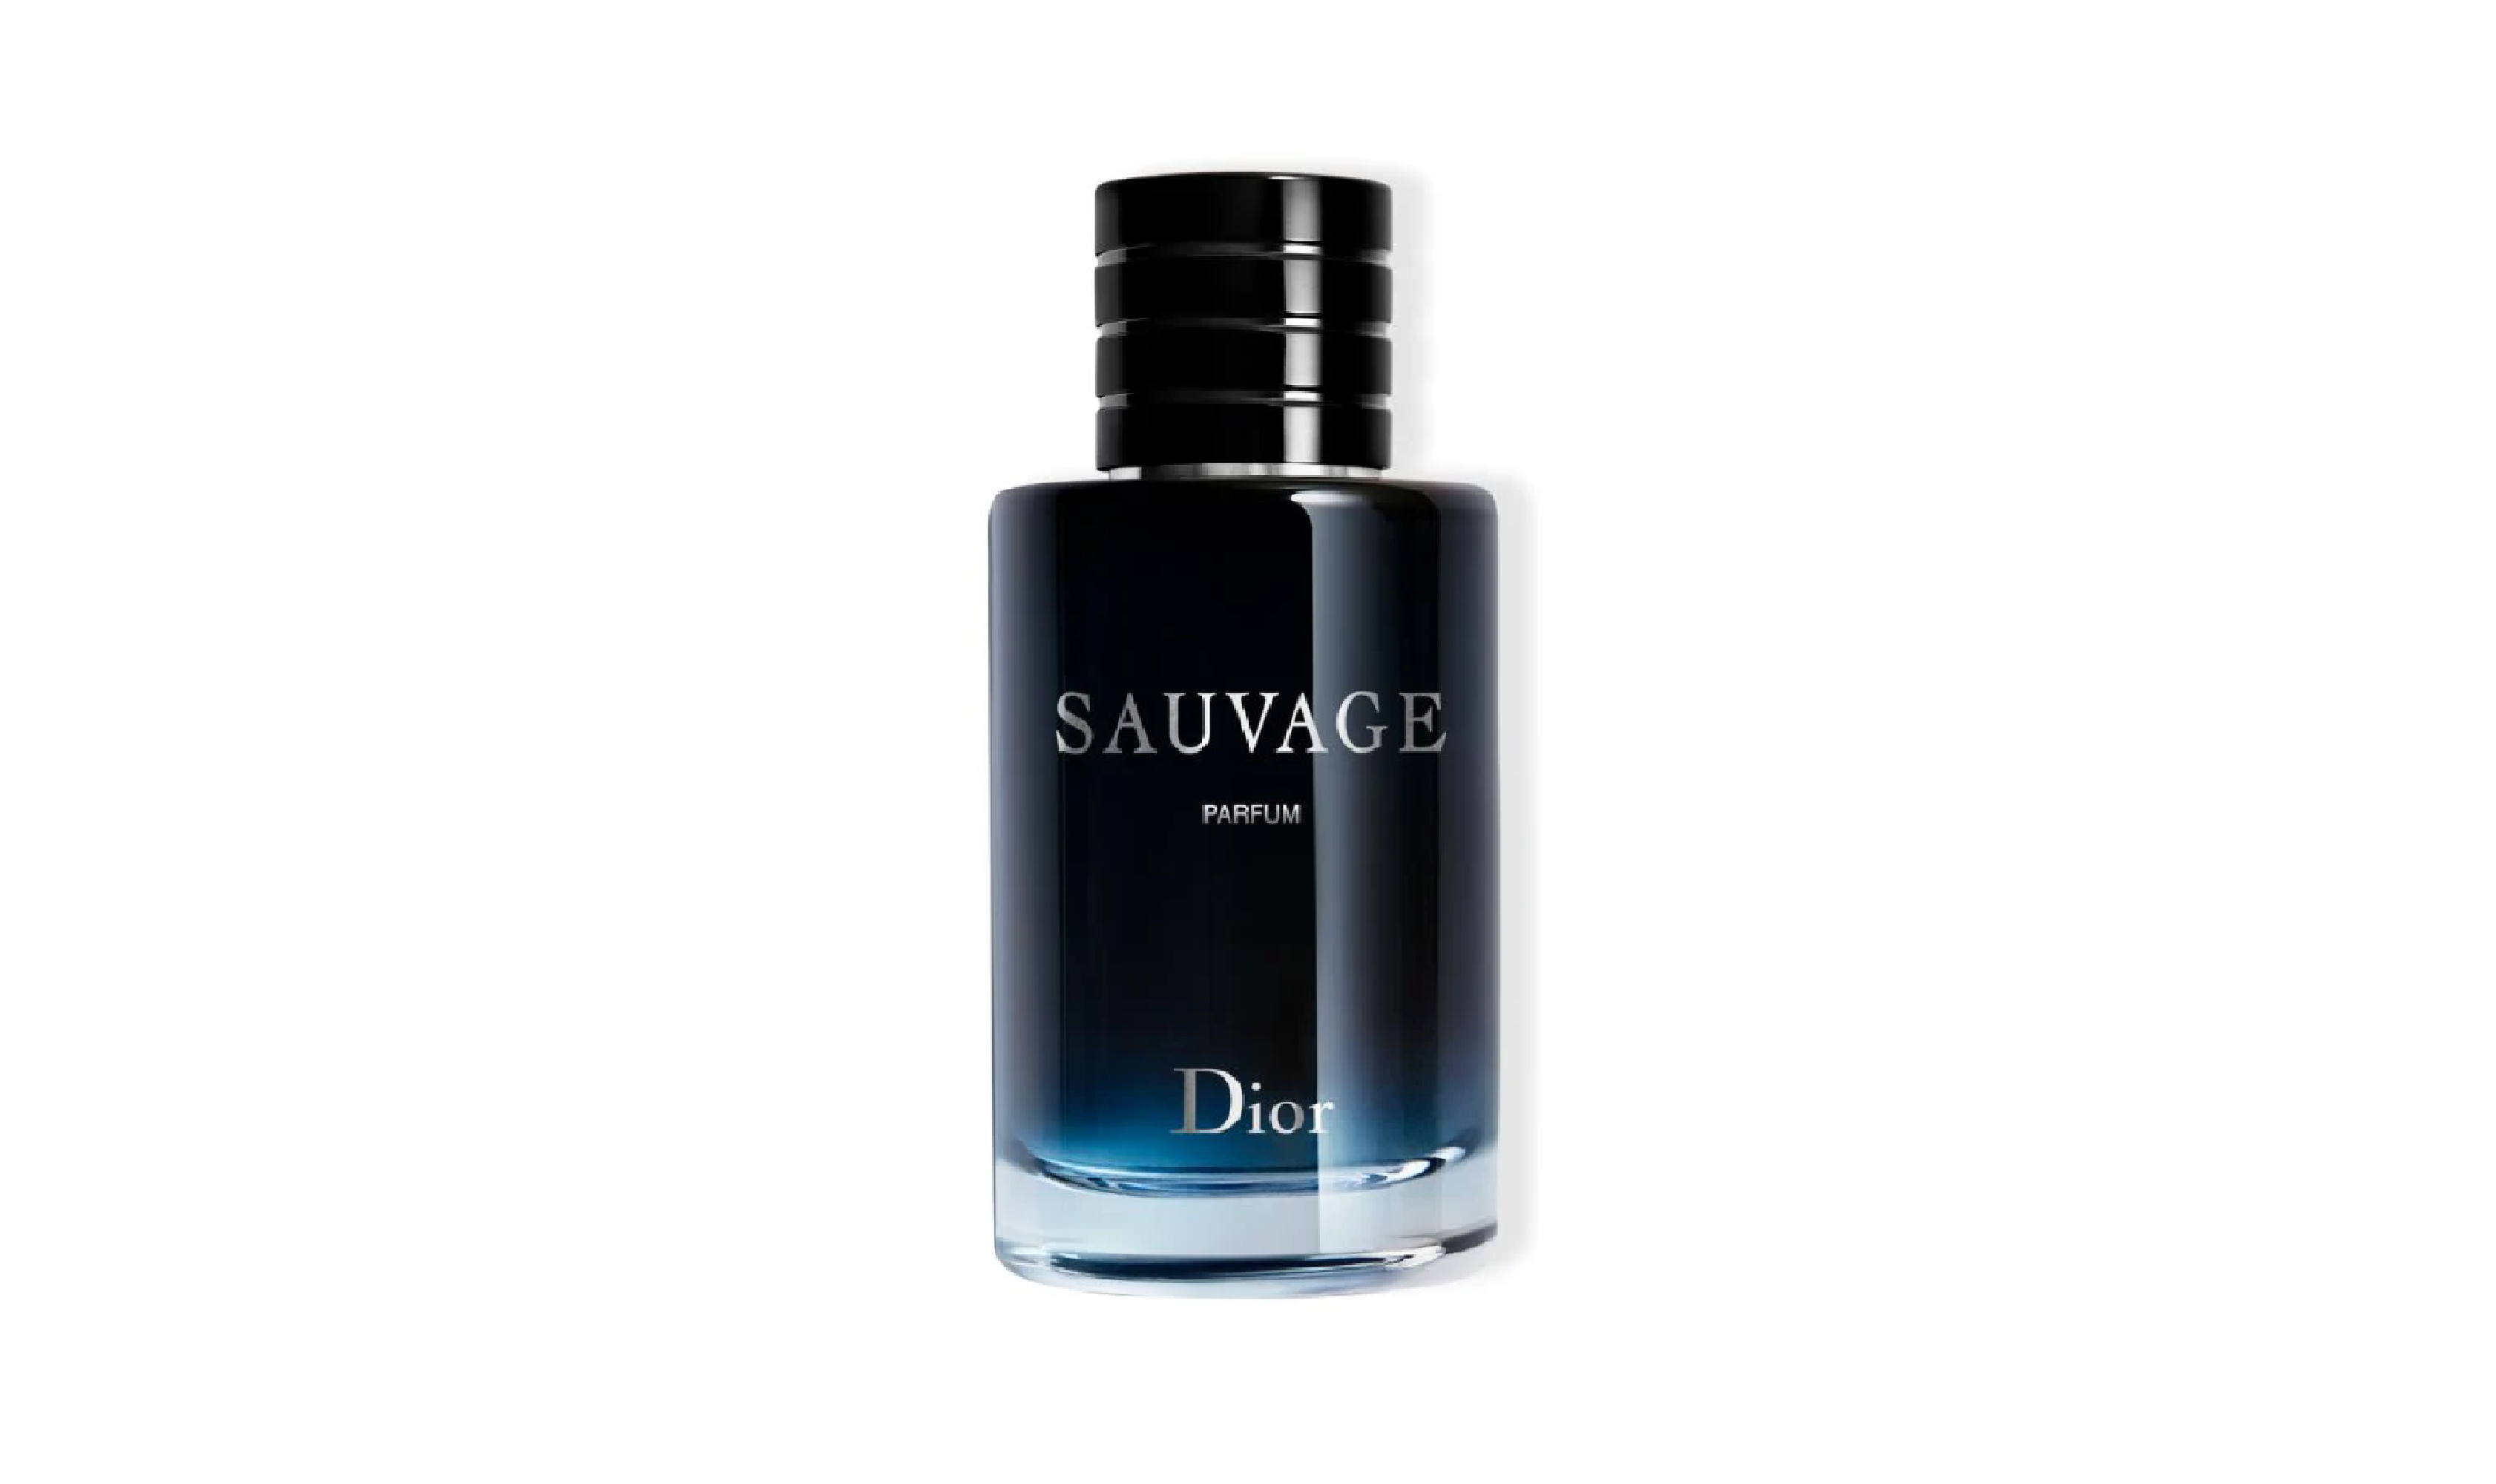 Dior - Sauvage Parfum (ディオール - ソヴァージュ パルファン)